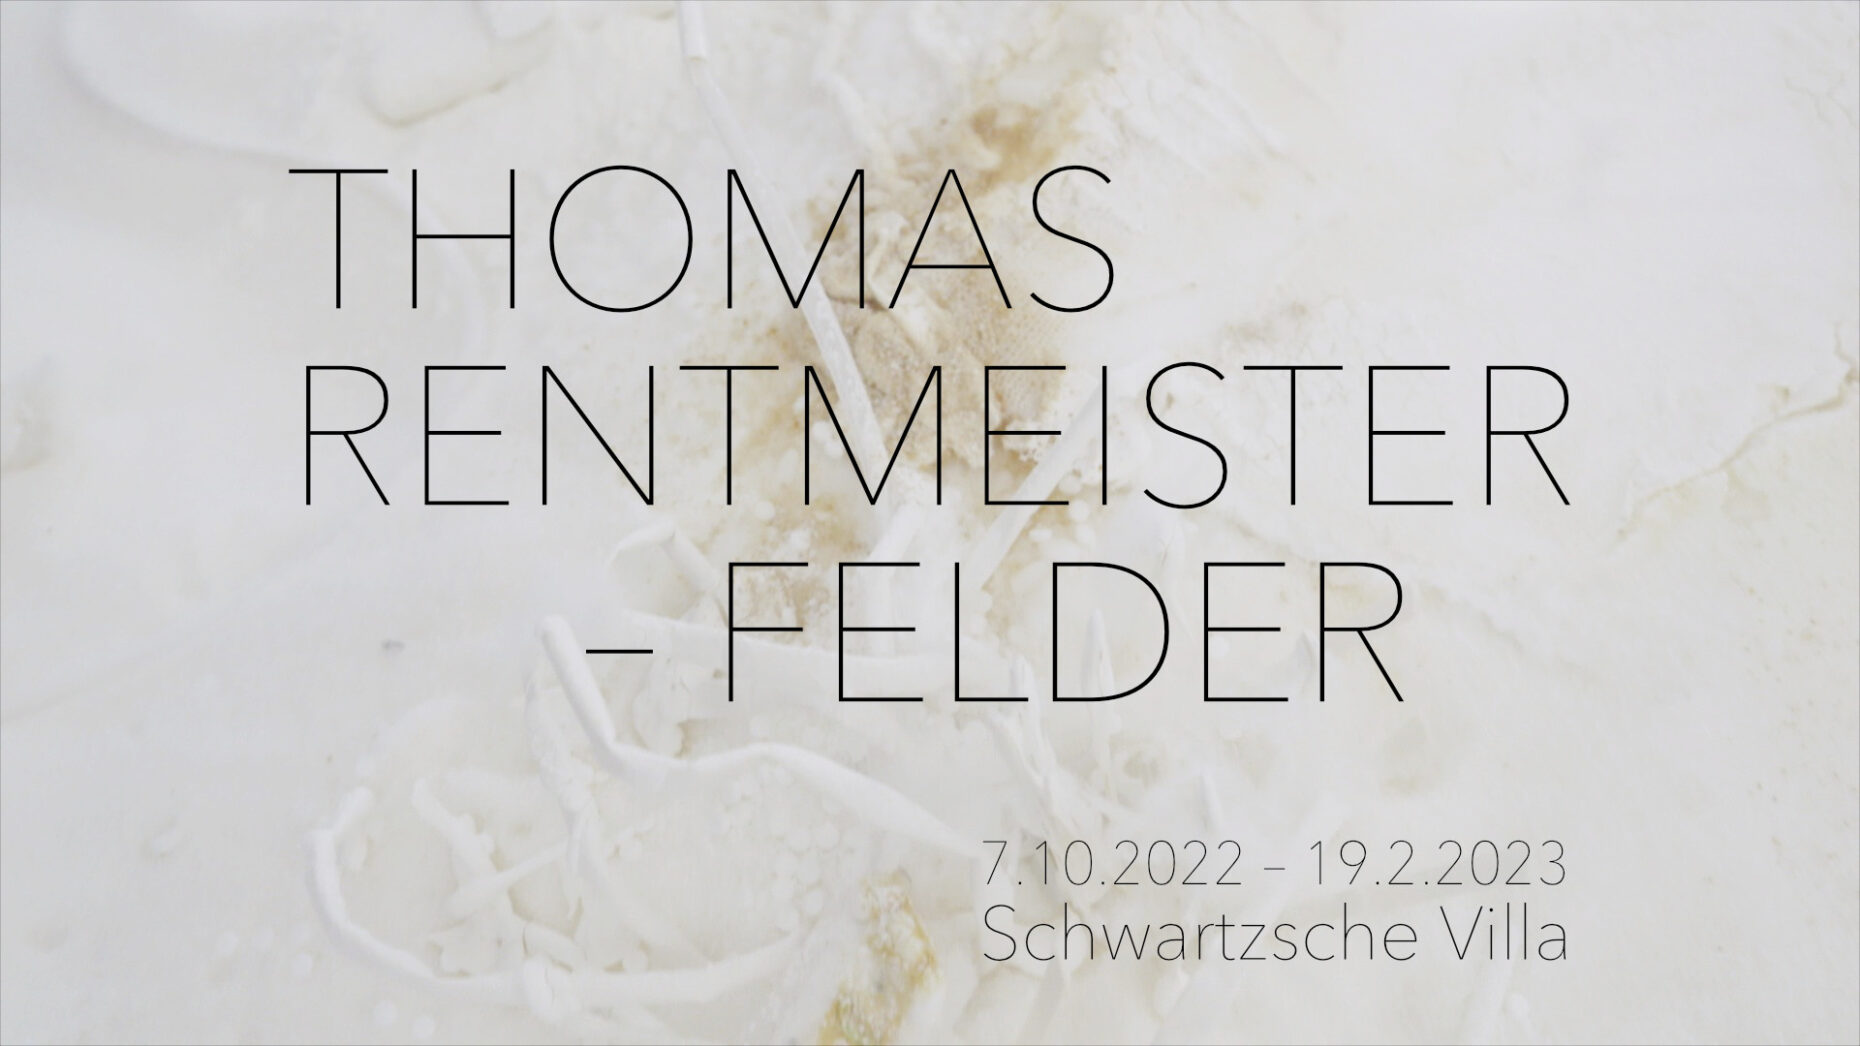 Thomas Rentmeister Felder